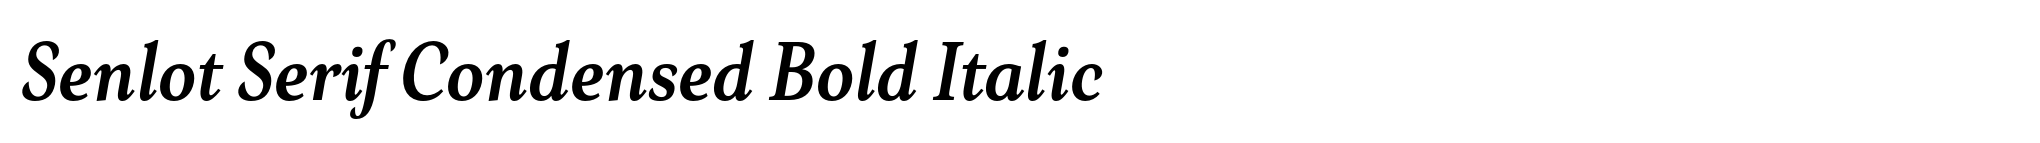 Senlot Serif Condensed Bold Italic image